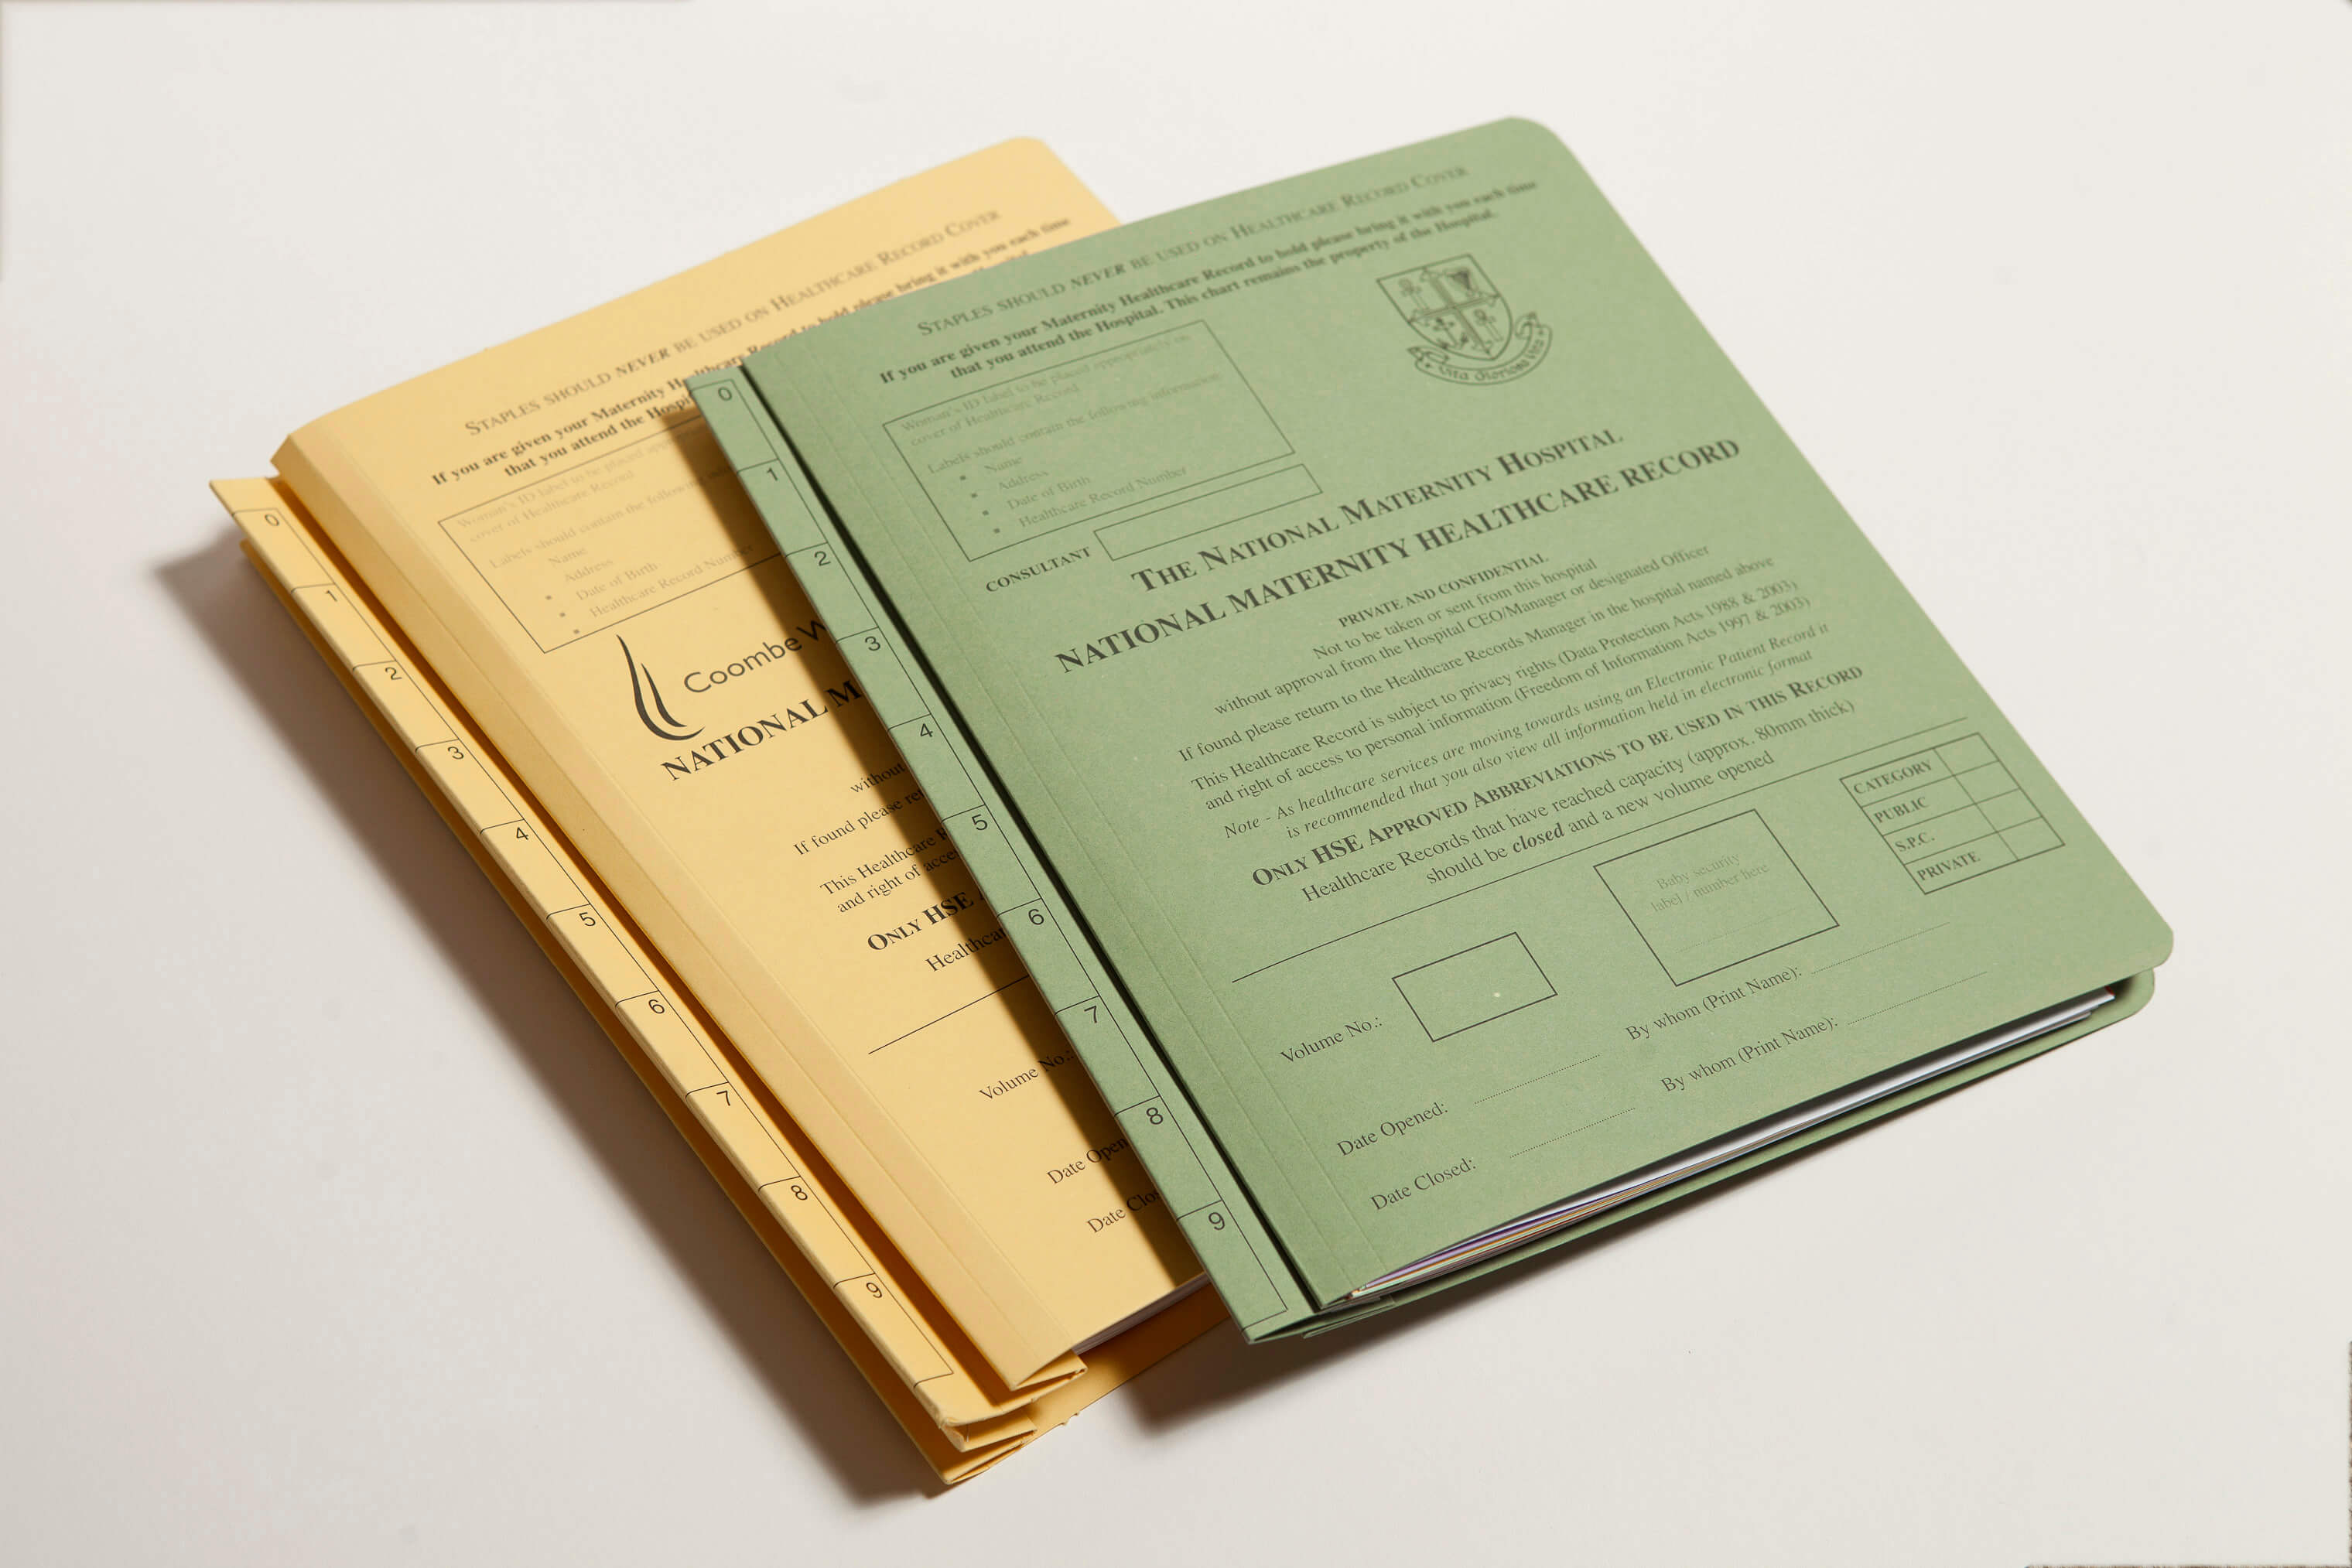 printed medical file covers